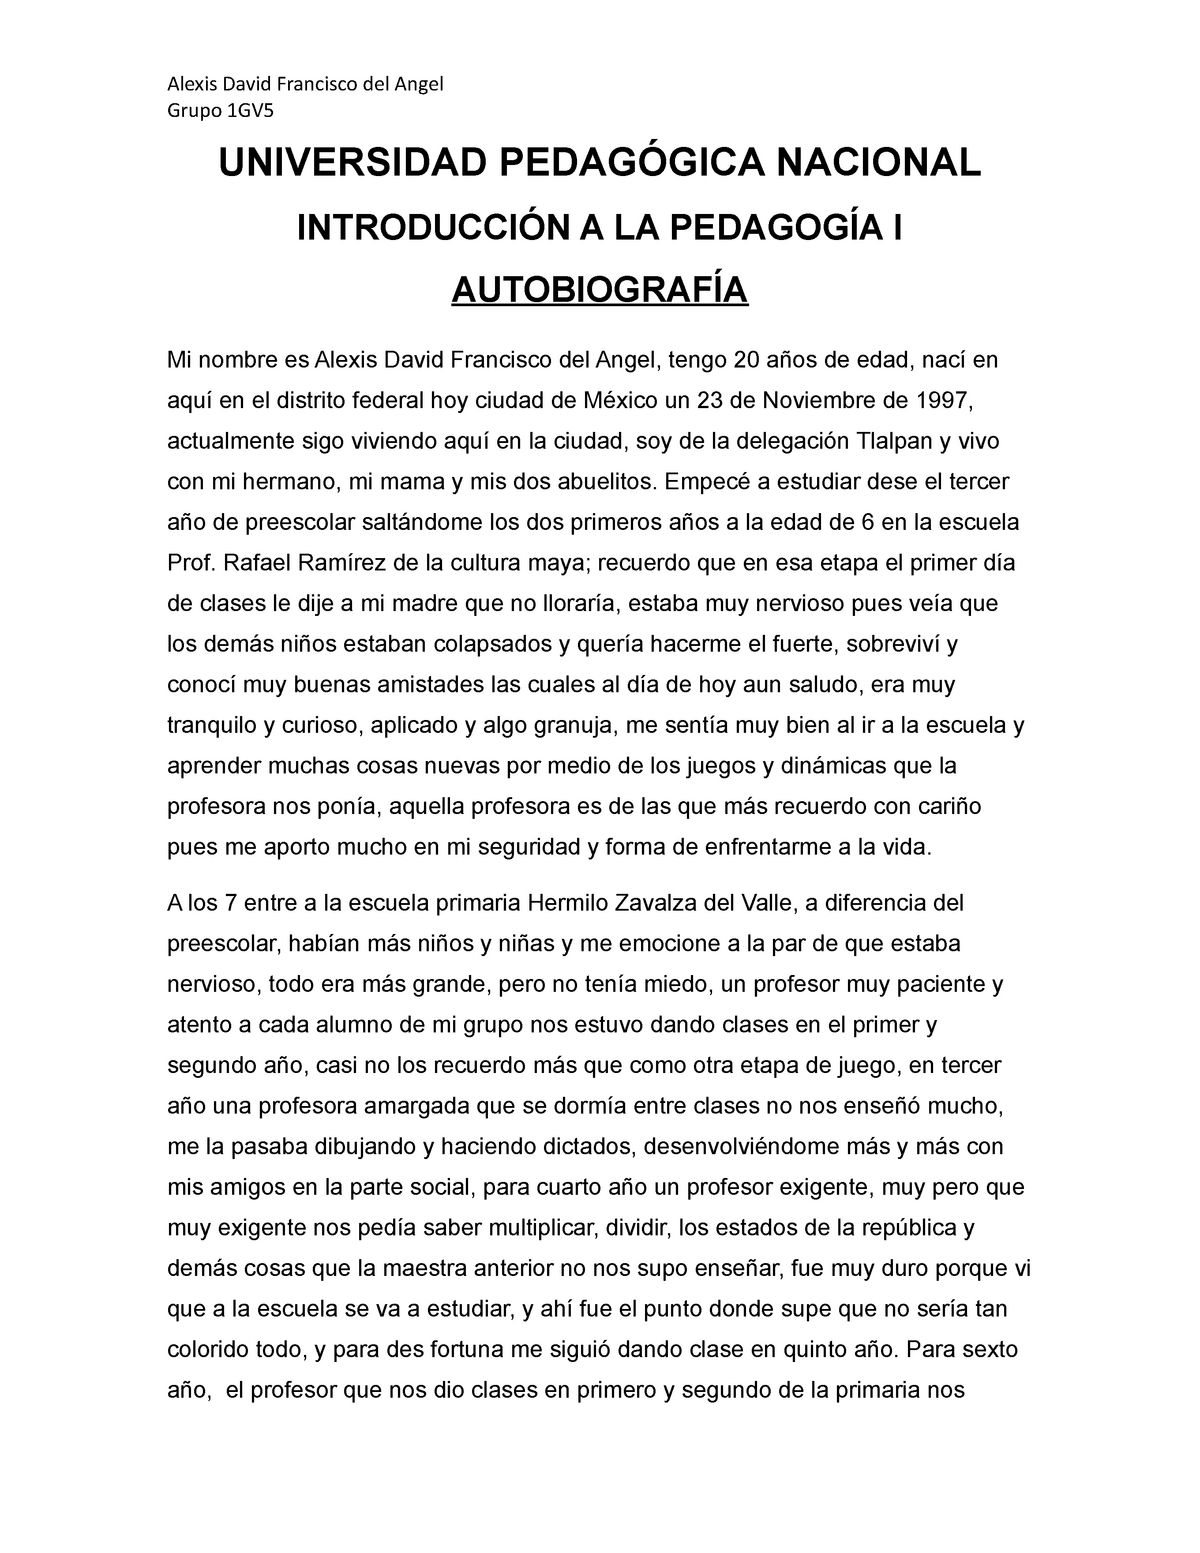 Autobiografia ejemplo alumno - Alexis David Francisco del Angel Grupo 1GV  UNIVERSIDAD PEDAGÓGICA - Studocu